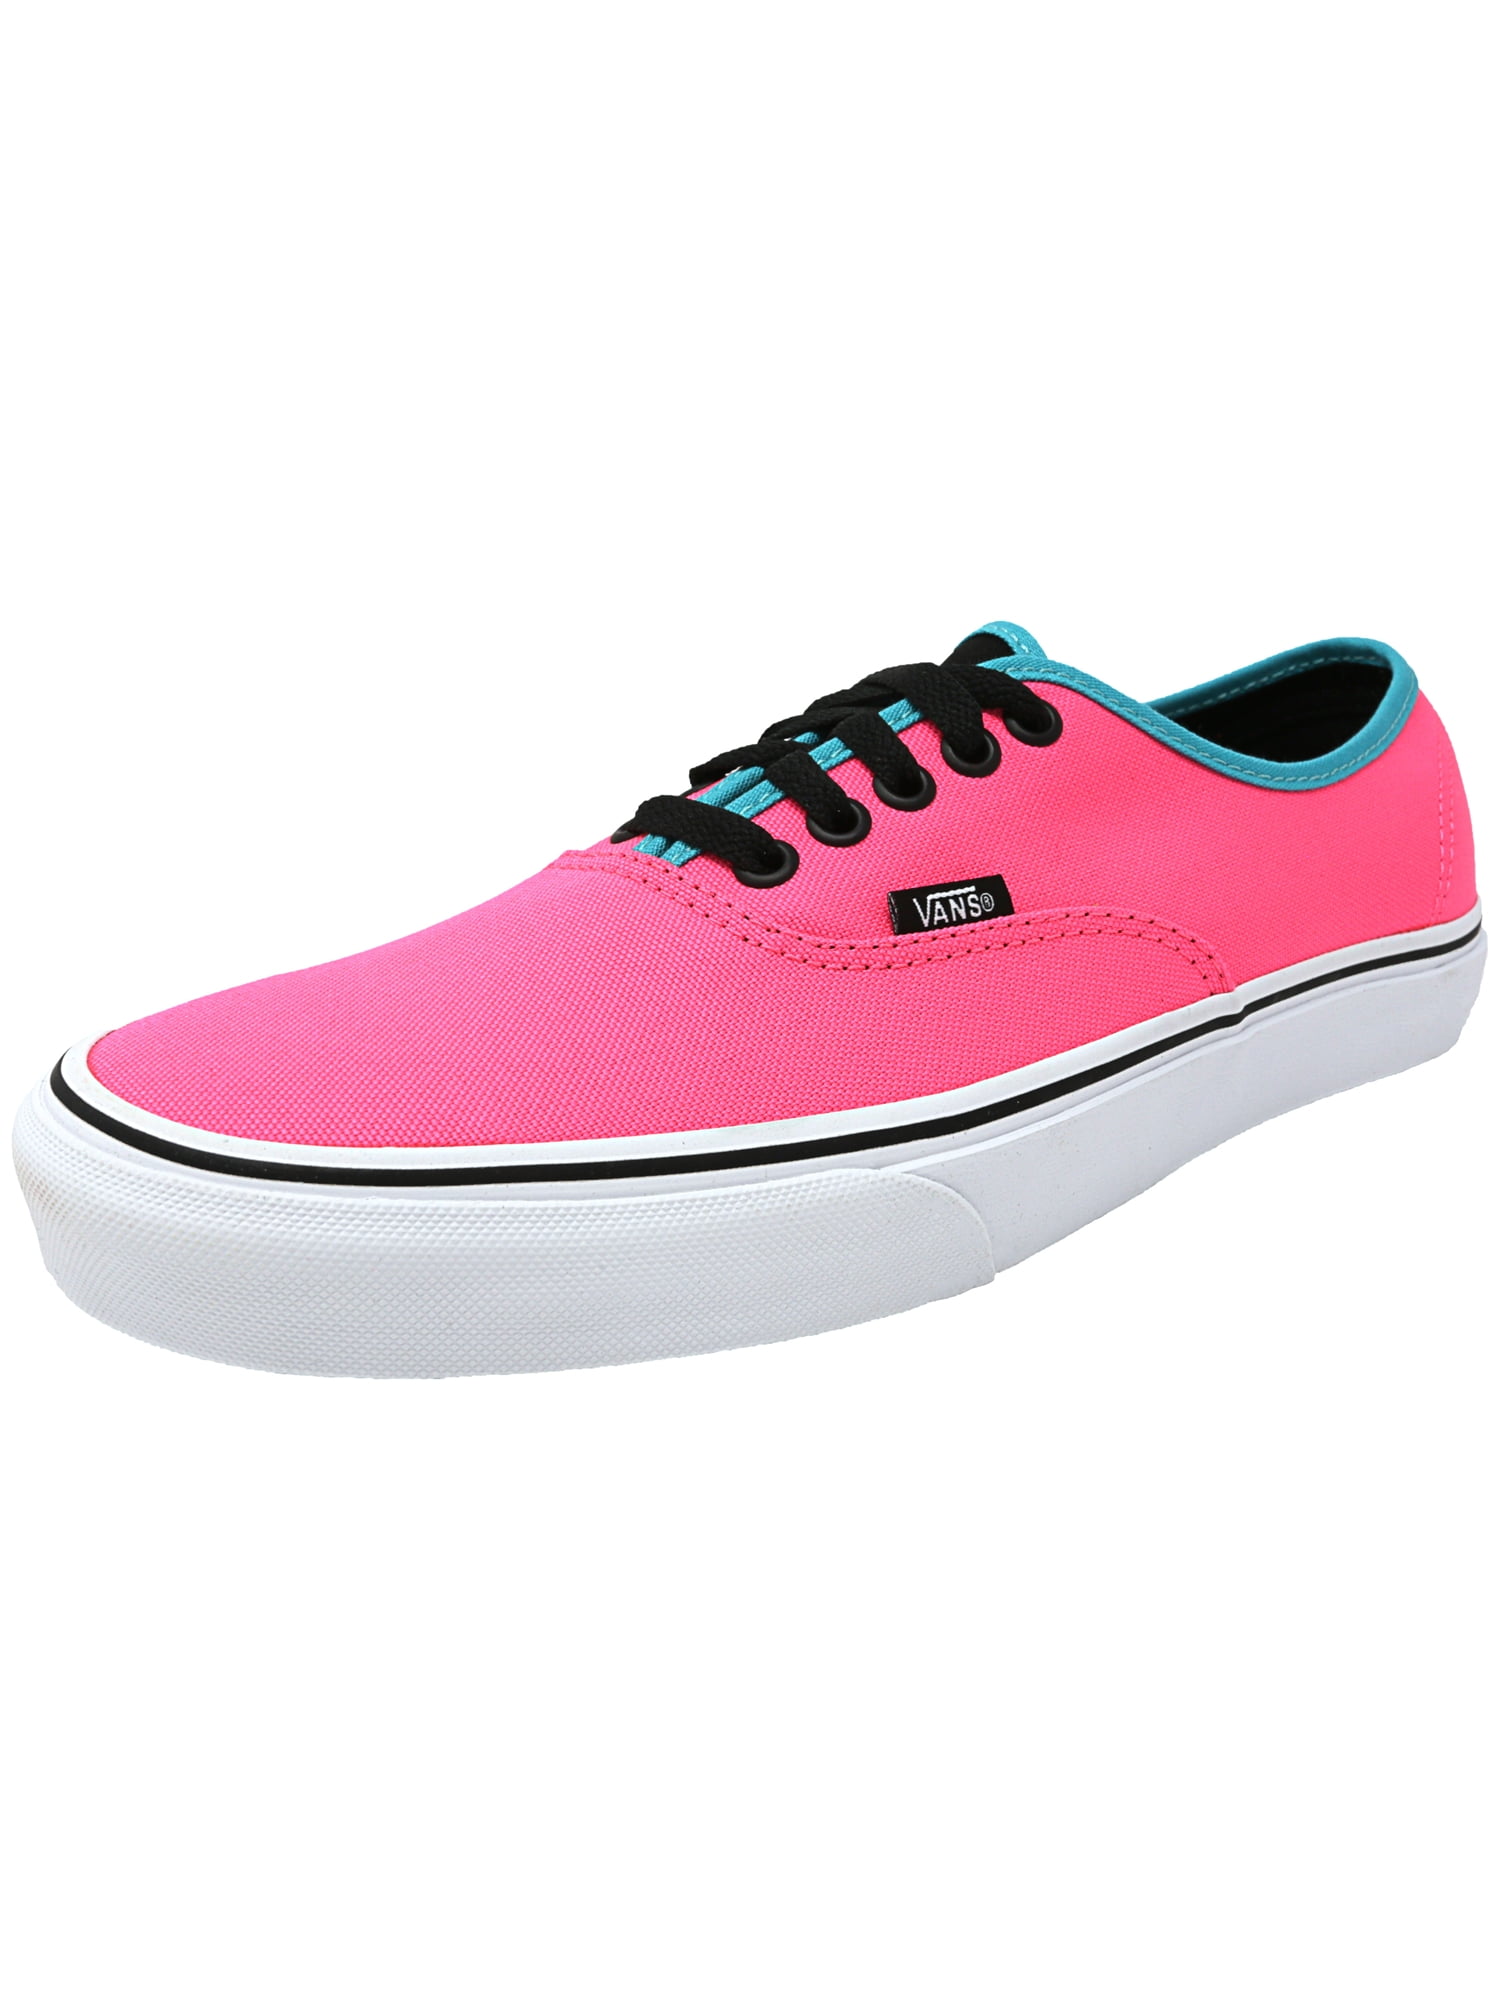 Para exponer mármol Enlace Vans Authentic Brite Neon Pink / Black Ankle-High Canvas Skateboarding Shoe  - 12M 10.5M - Walmart.com